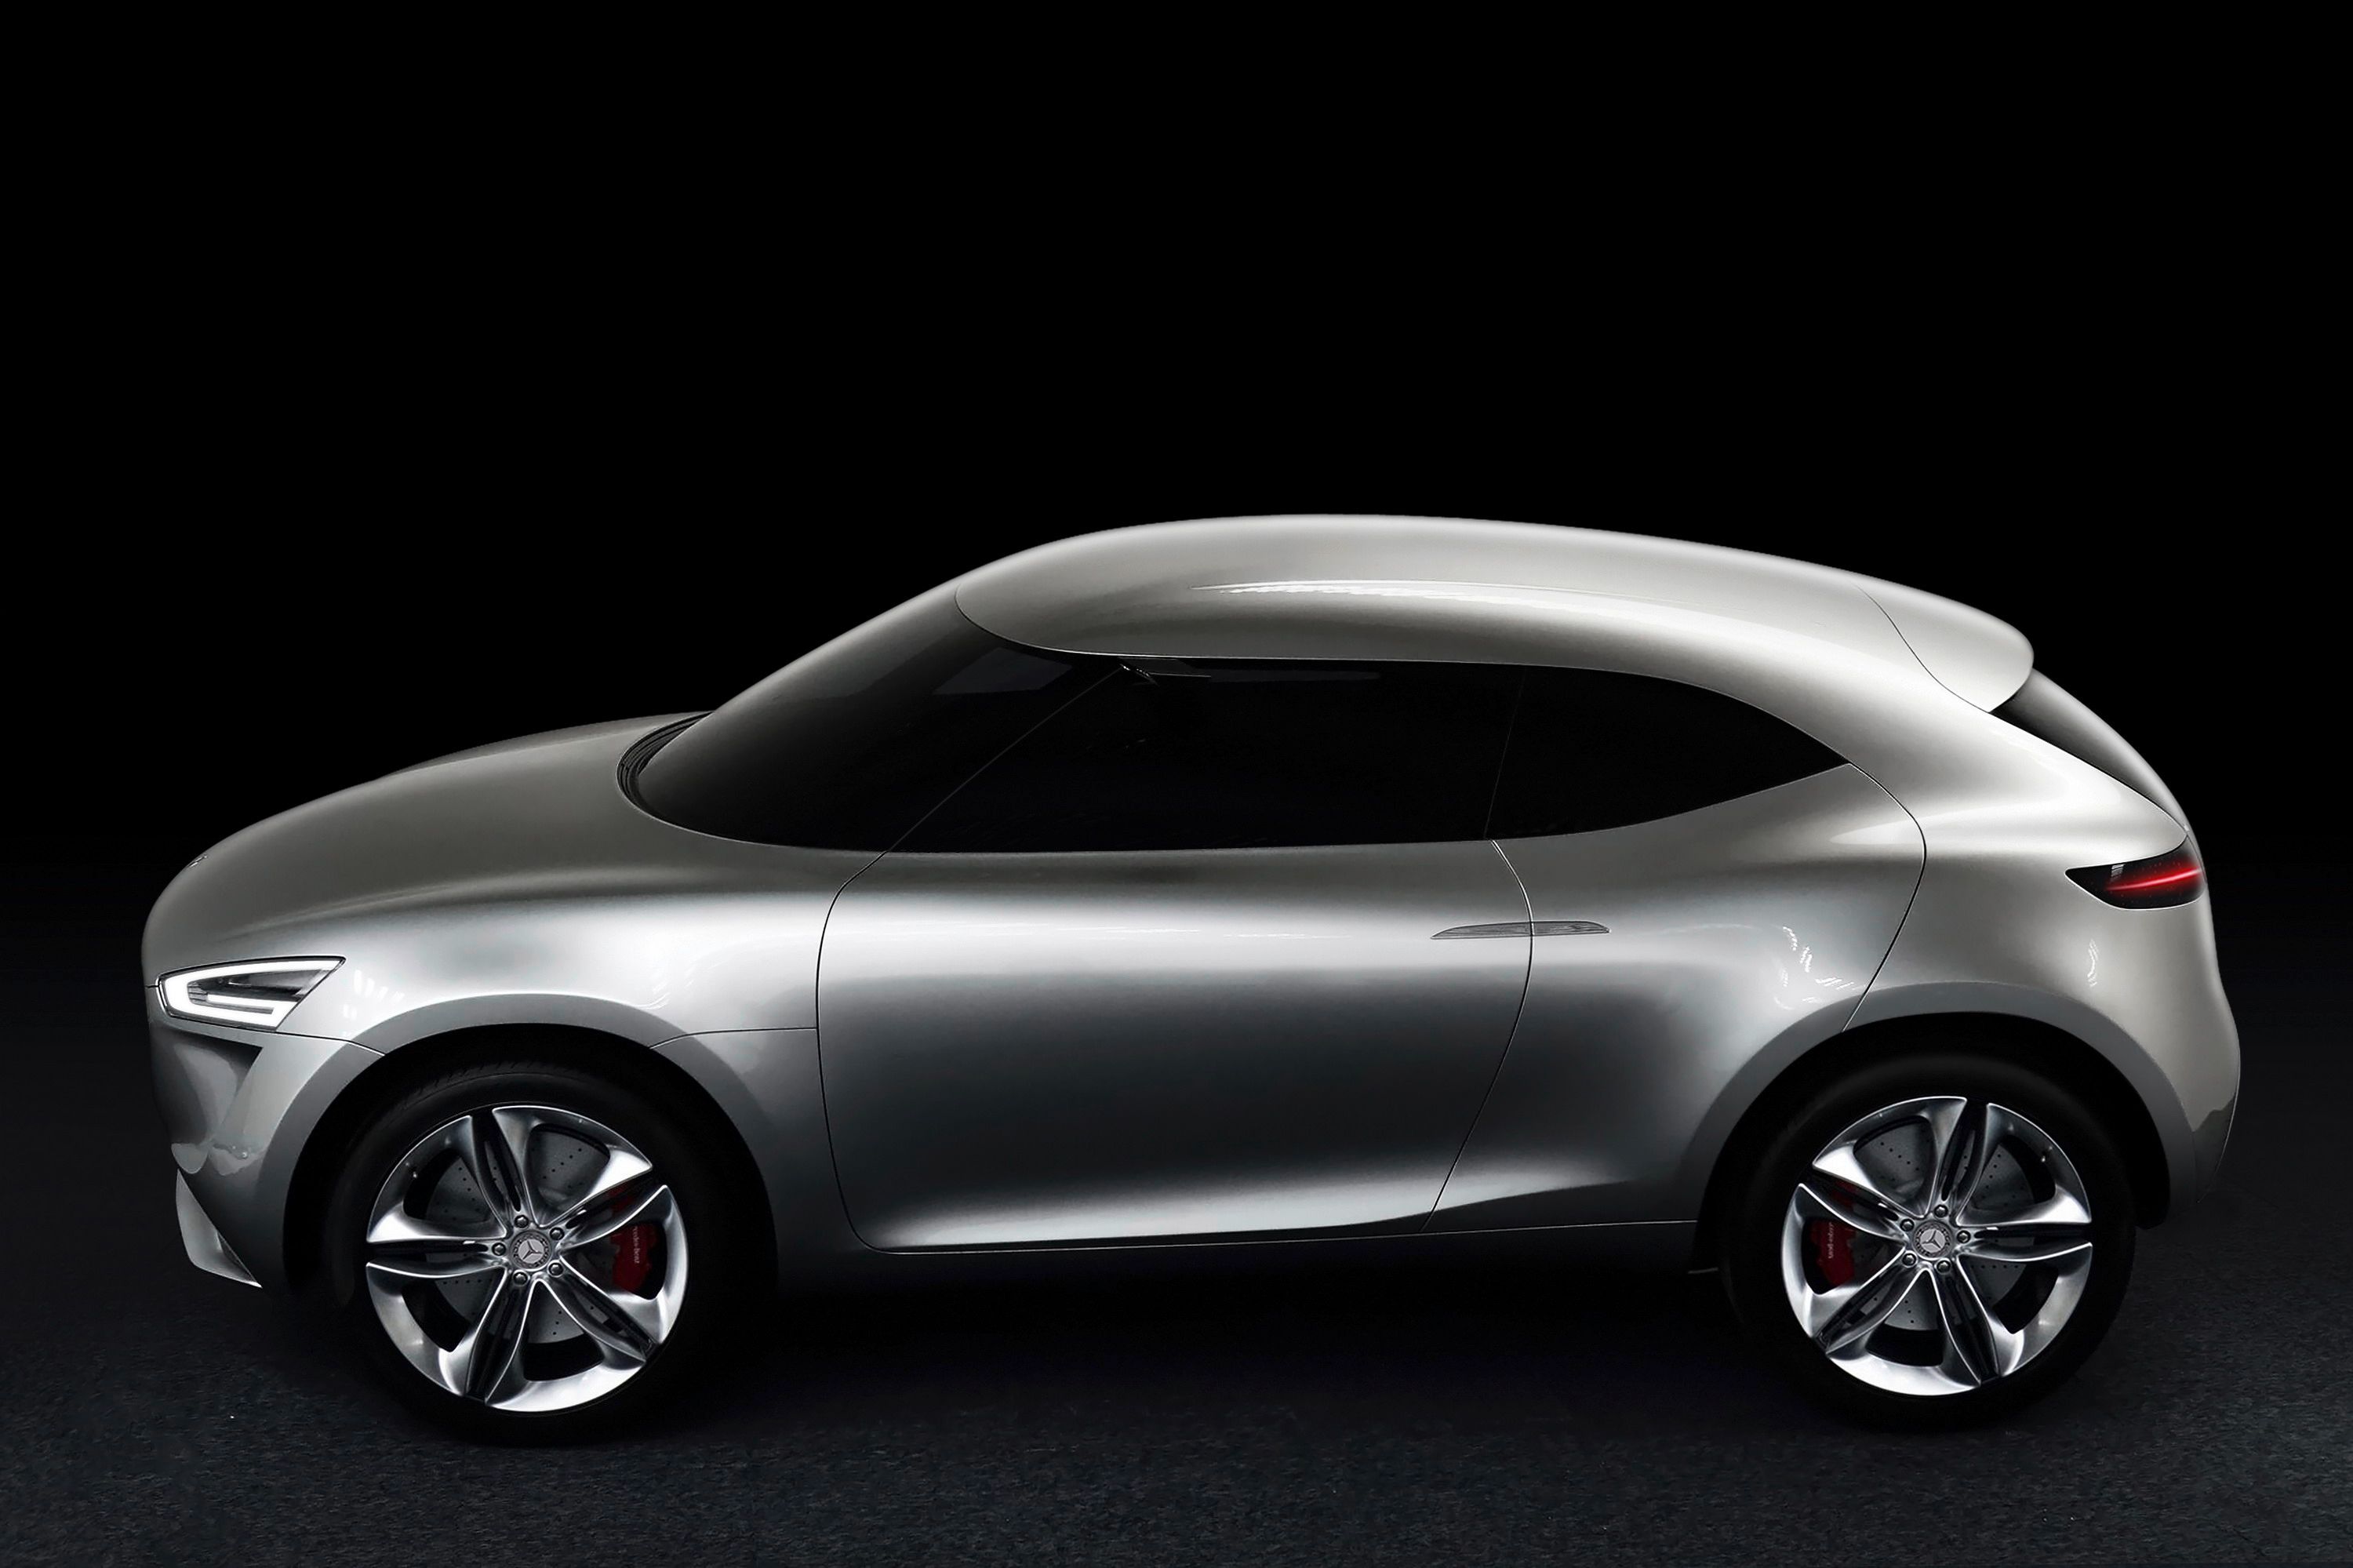 2015 Mercedes-Benz Vision G-Code Concept